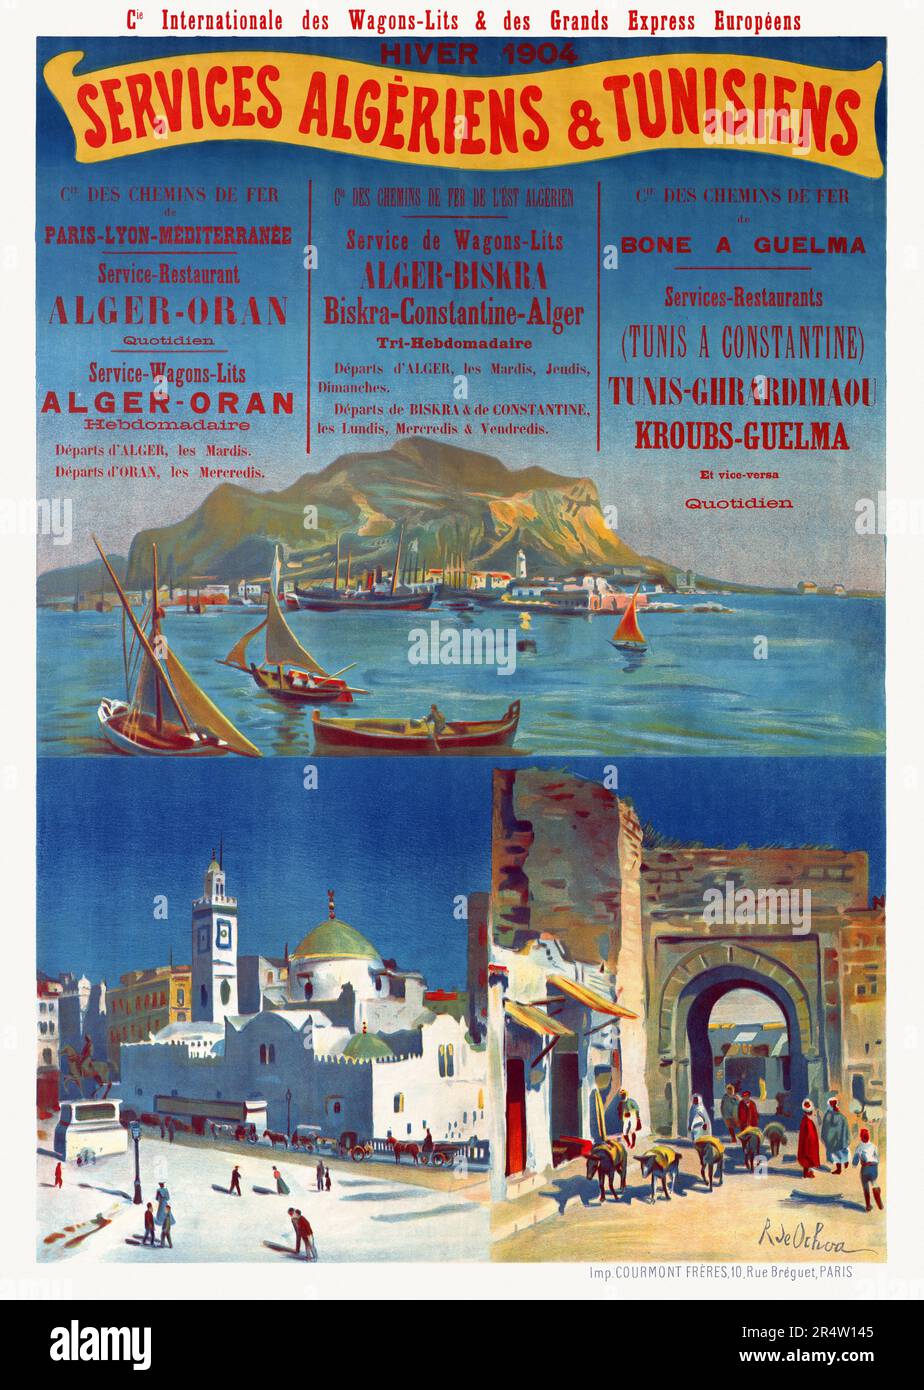 Cie Internationale des Wagons-lits & des Grands Express Européens. Services Algériens & Tunisiens by Rafael de Ochoa y Madrazo (1858-1935). Poster published in 1904. Stock Photo